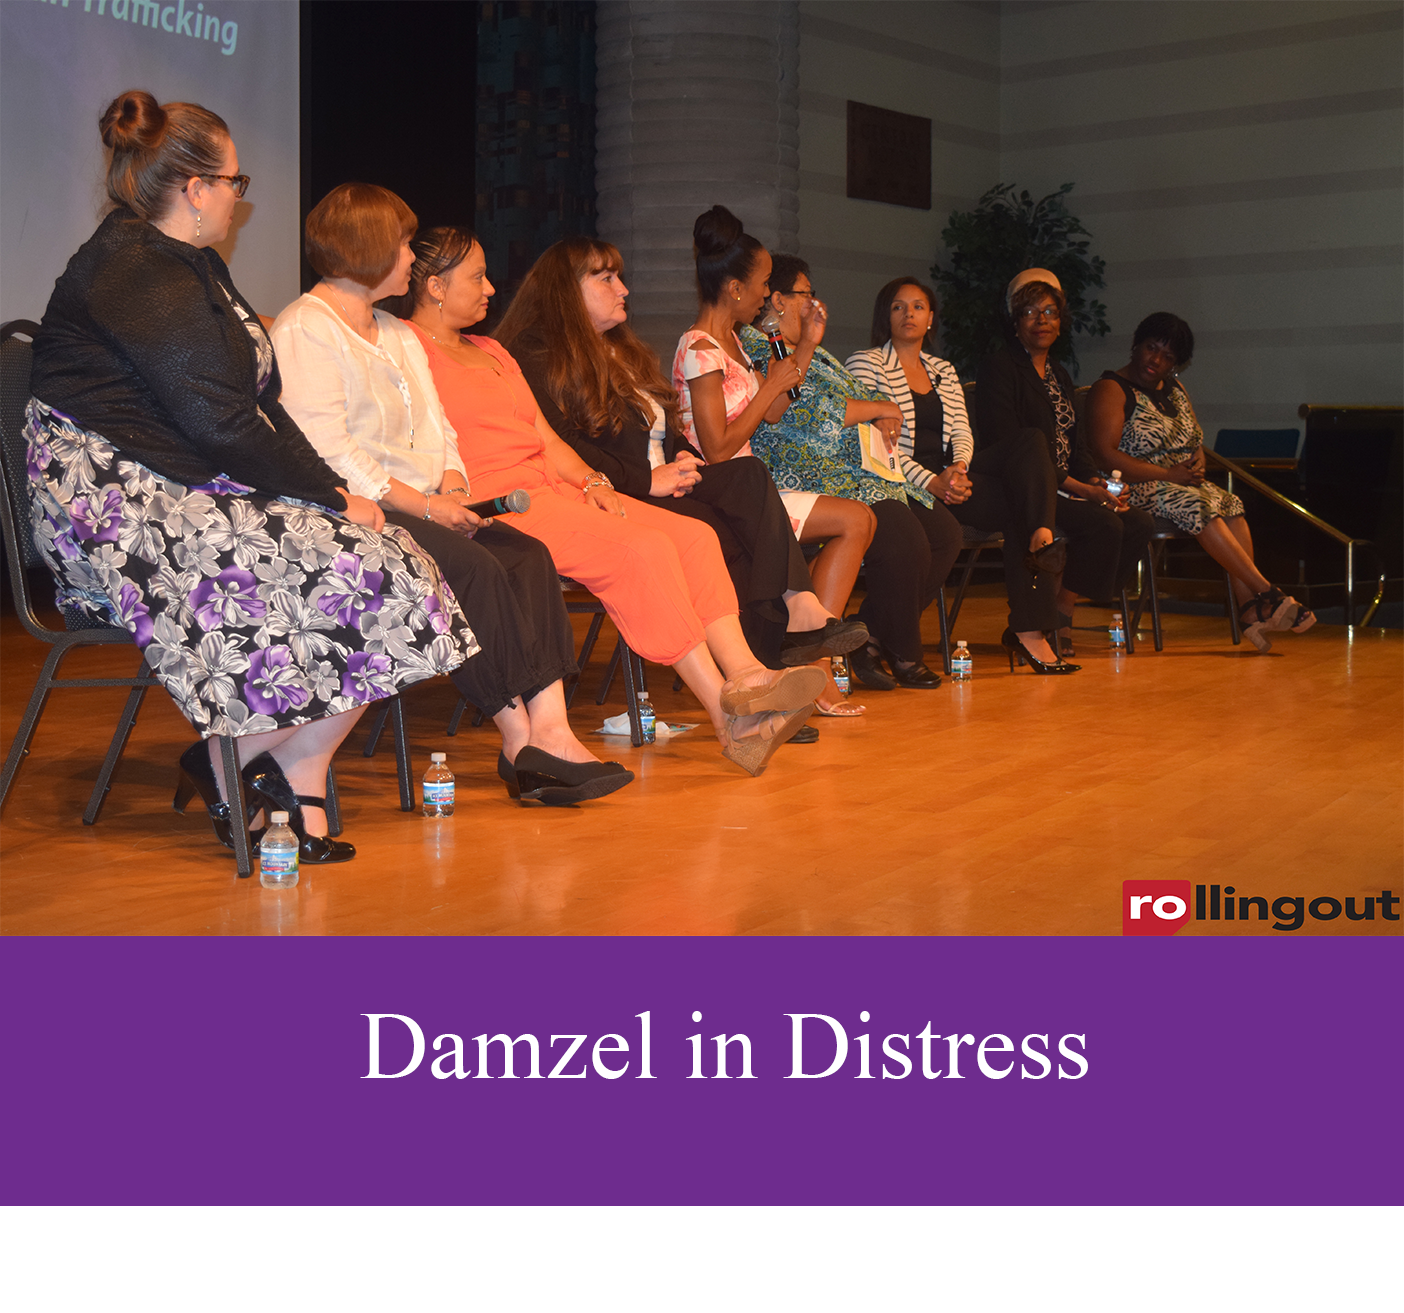 Damzel in Distress: The Shaun Robinson Foundation for Girls